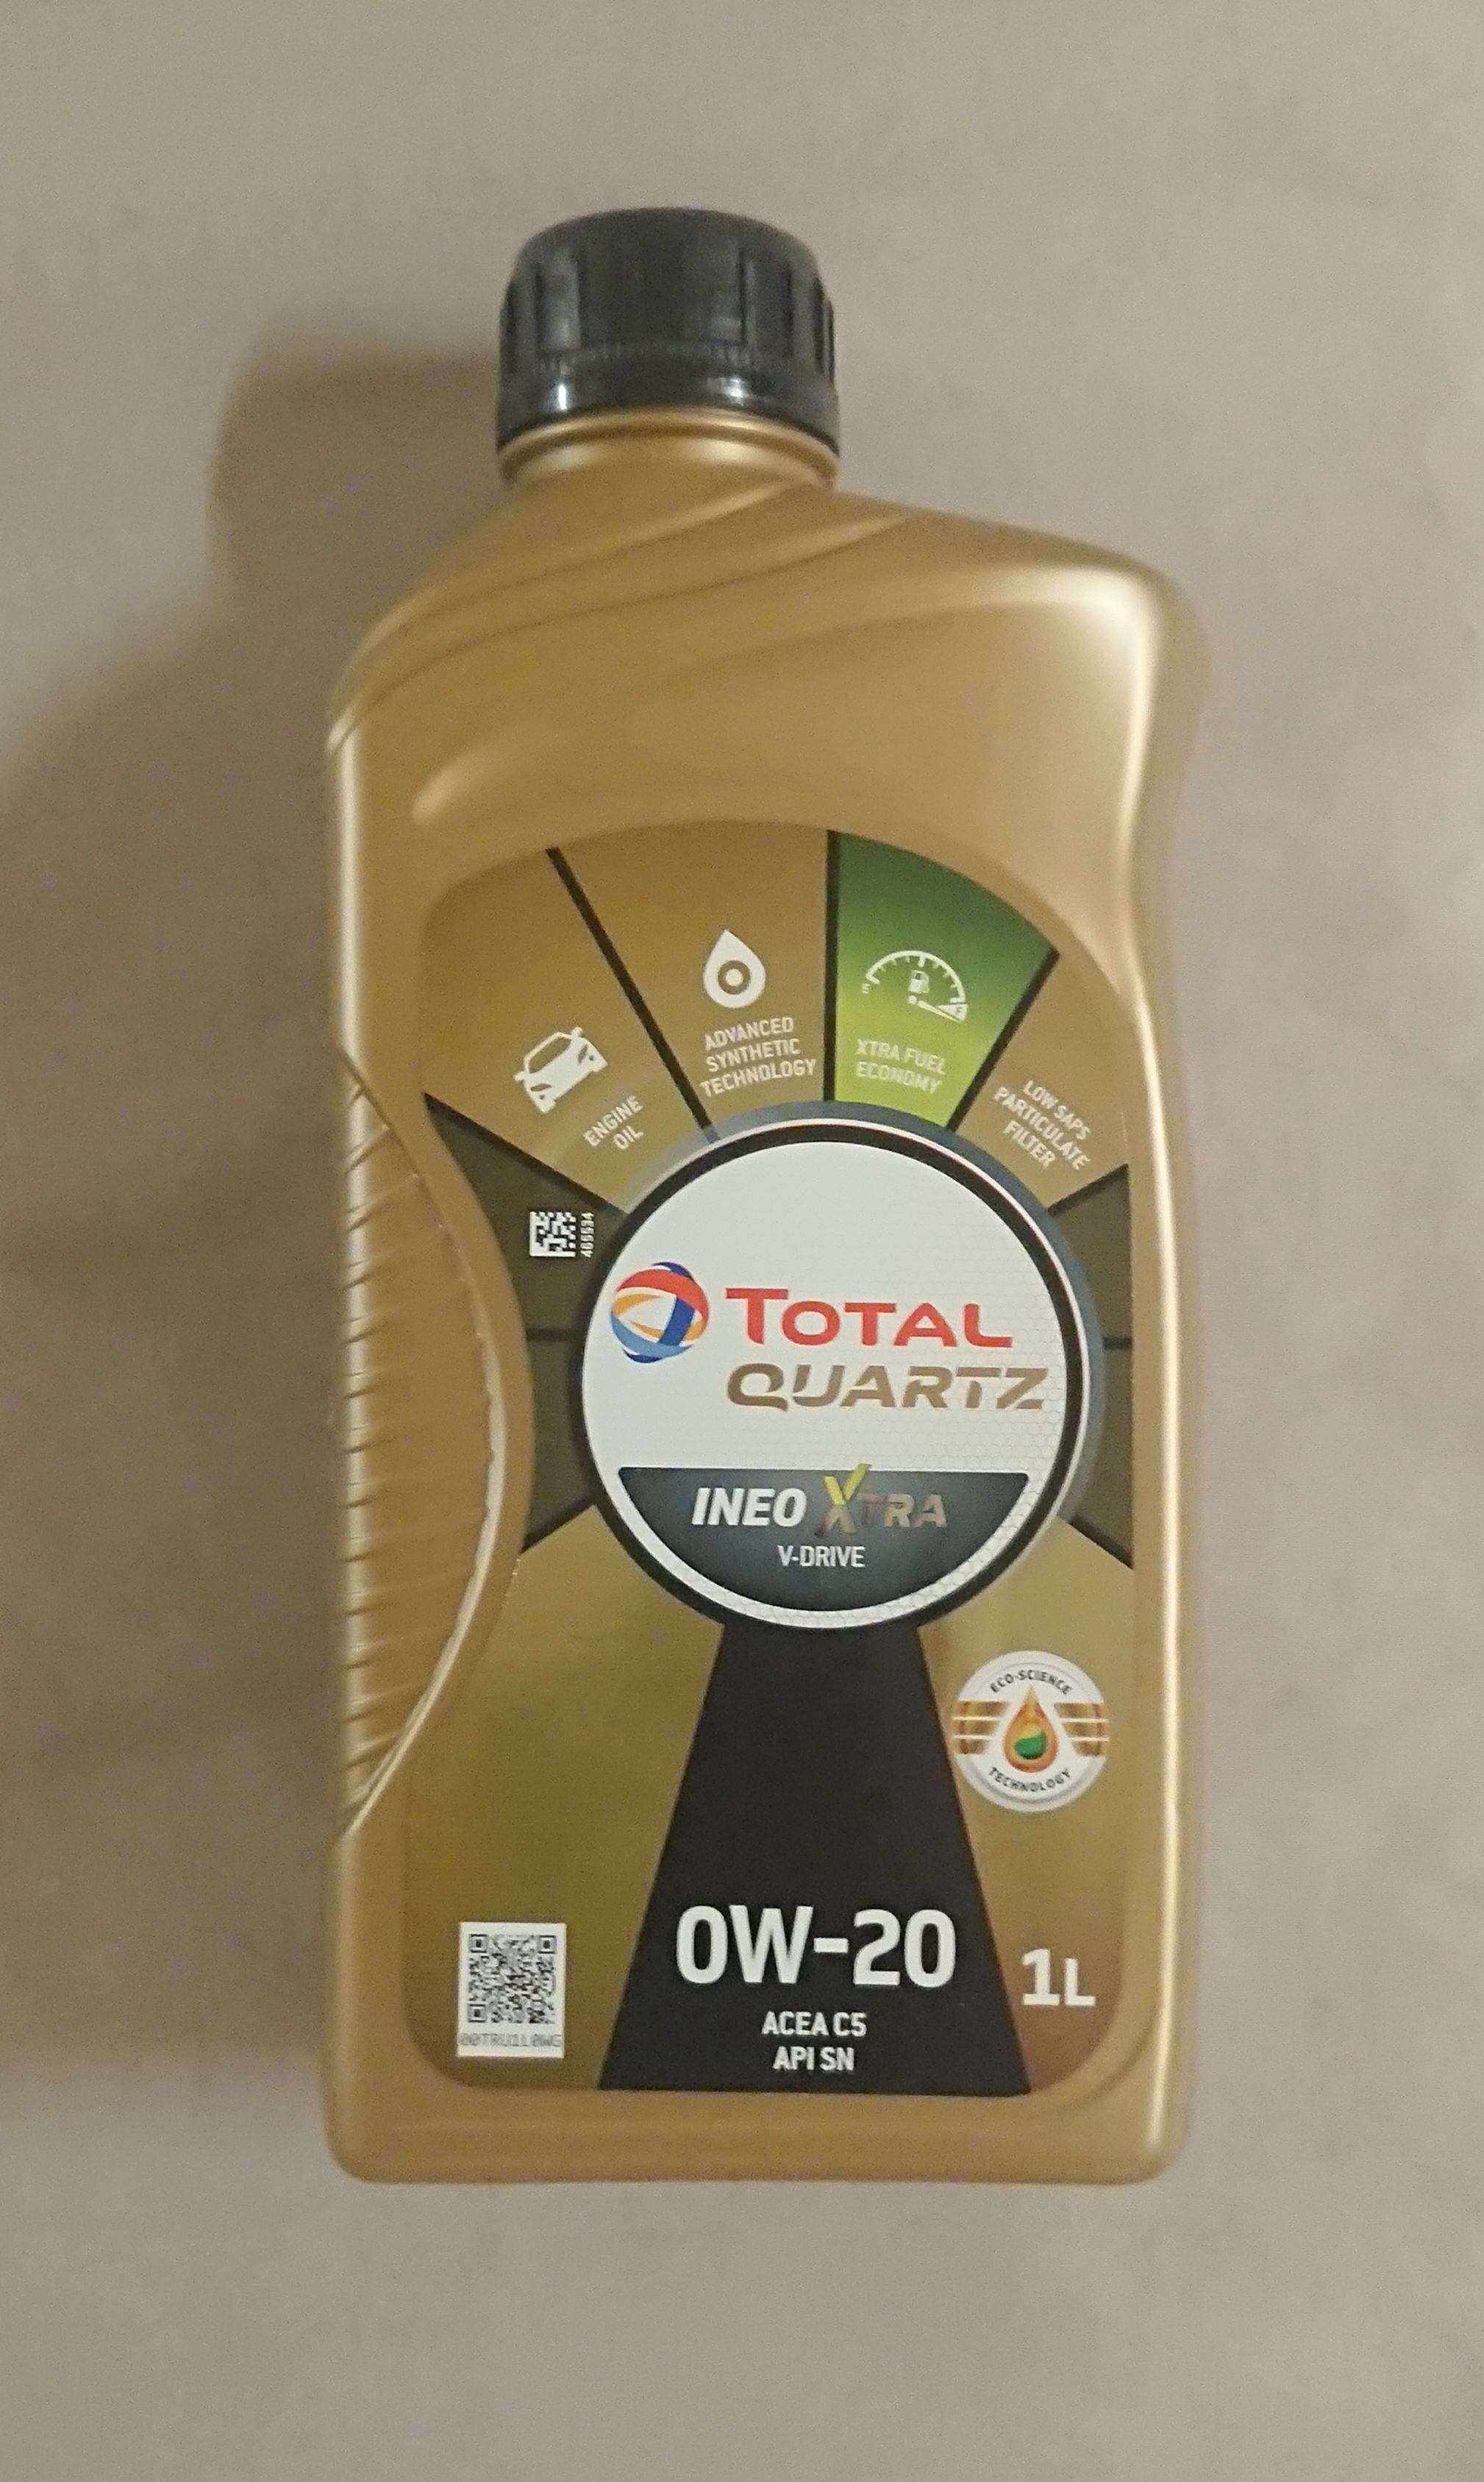 Premium-Schmierstoffe - Total Quartz Ineo XTRA V-DRIVE (Motoröl 0W